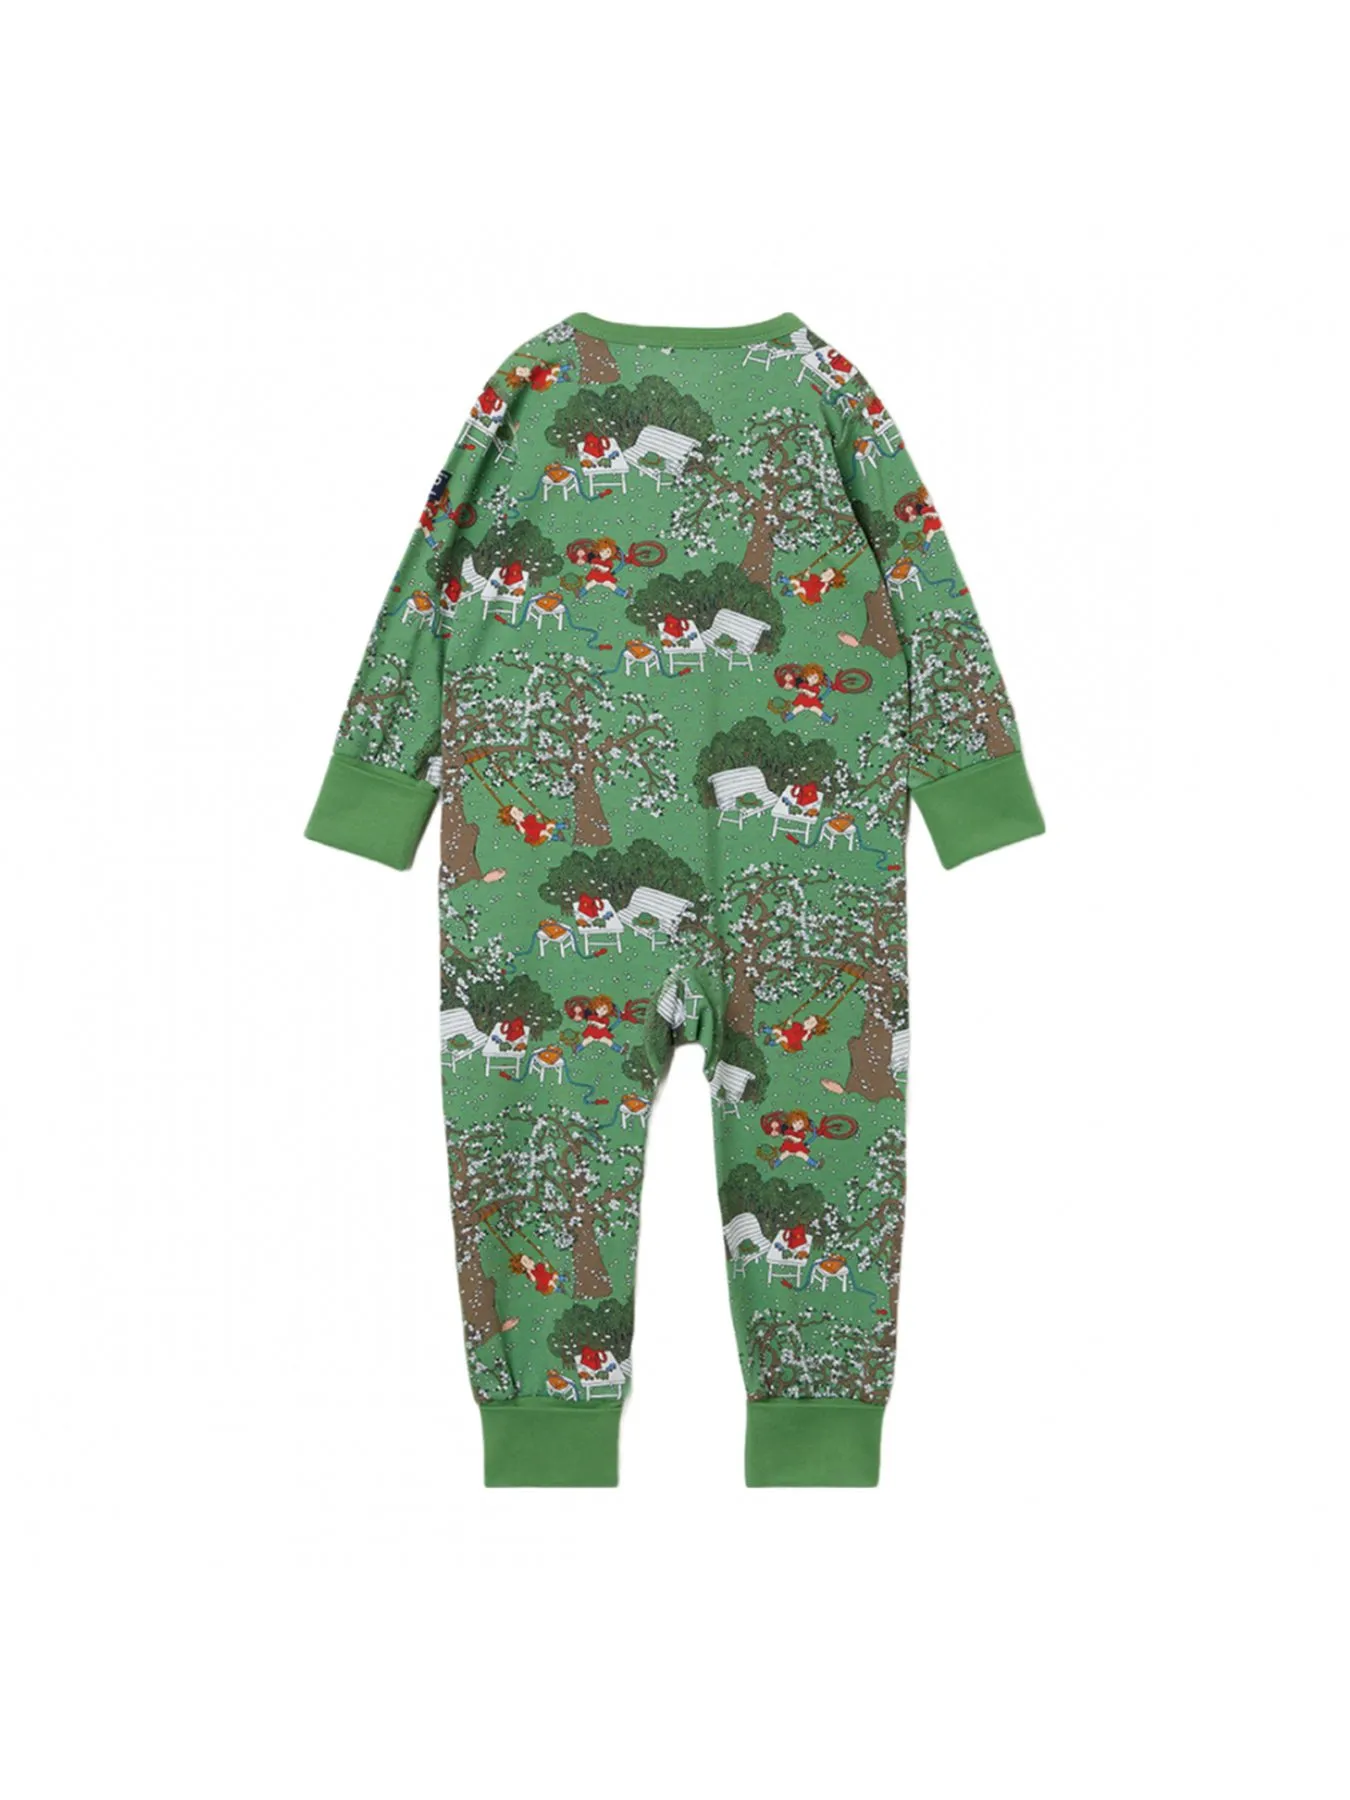 Pyjamas Lotta på Bråkmakargatan Baby - Grön